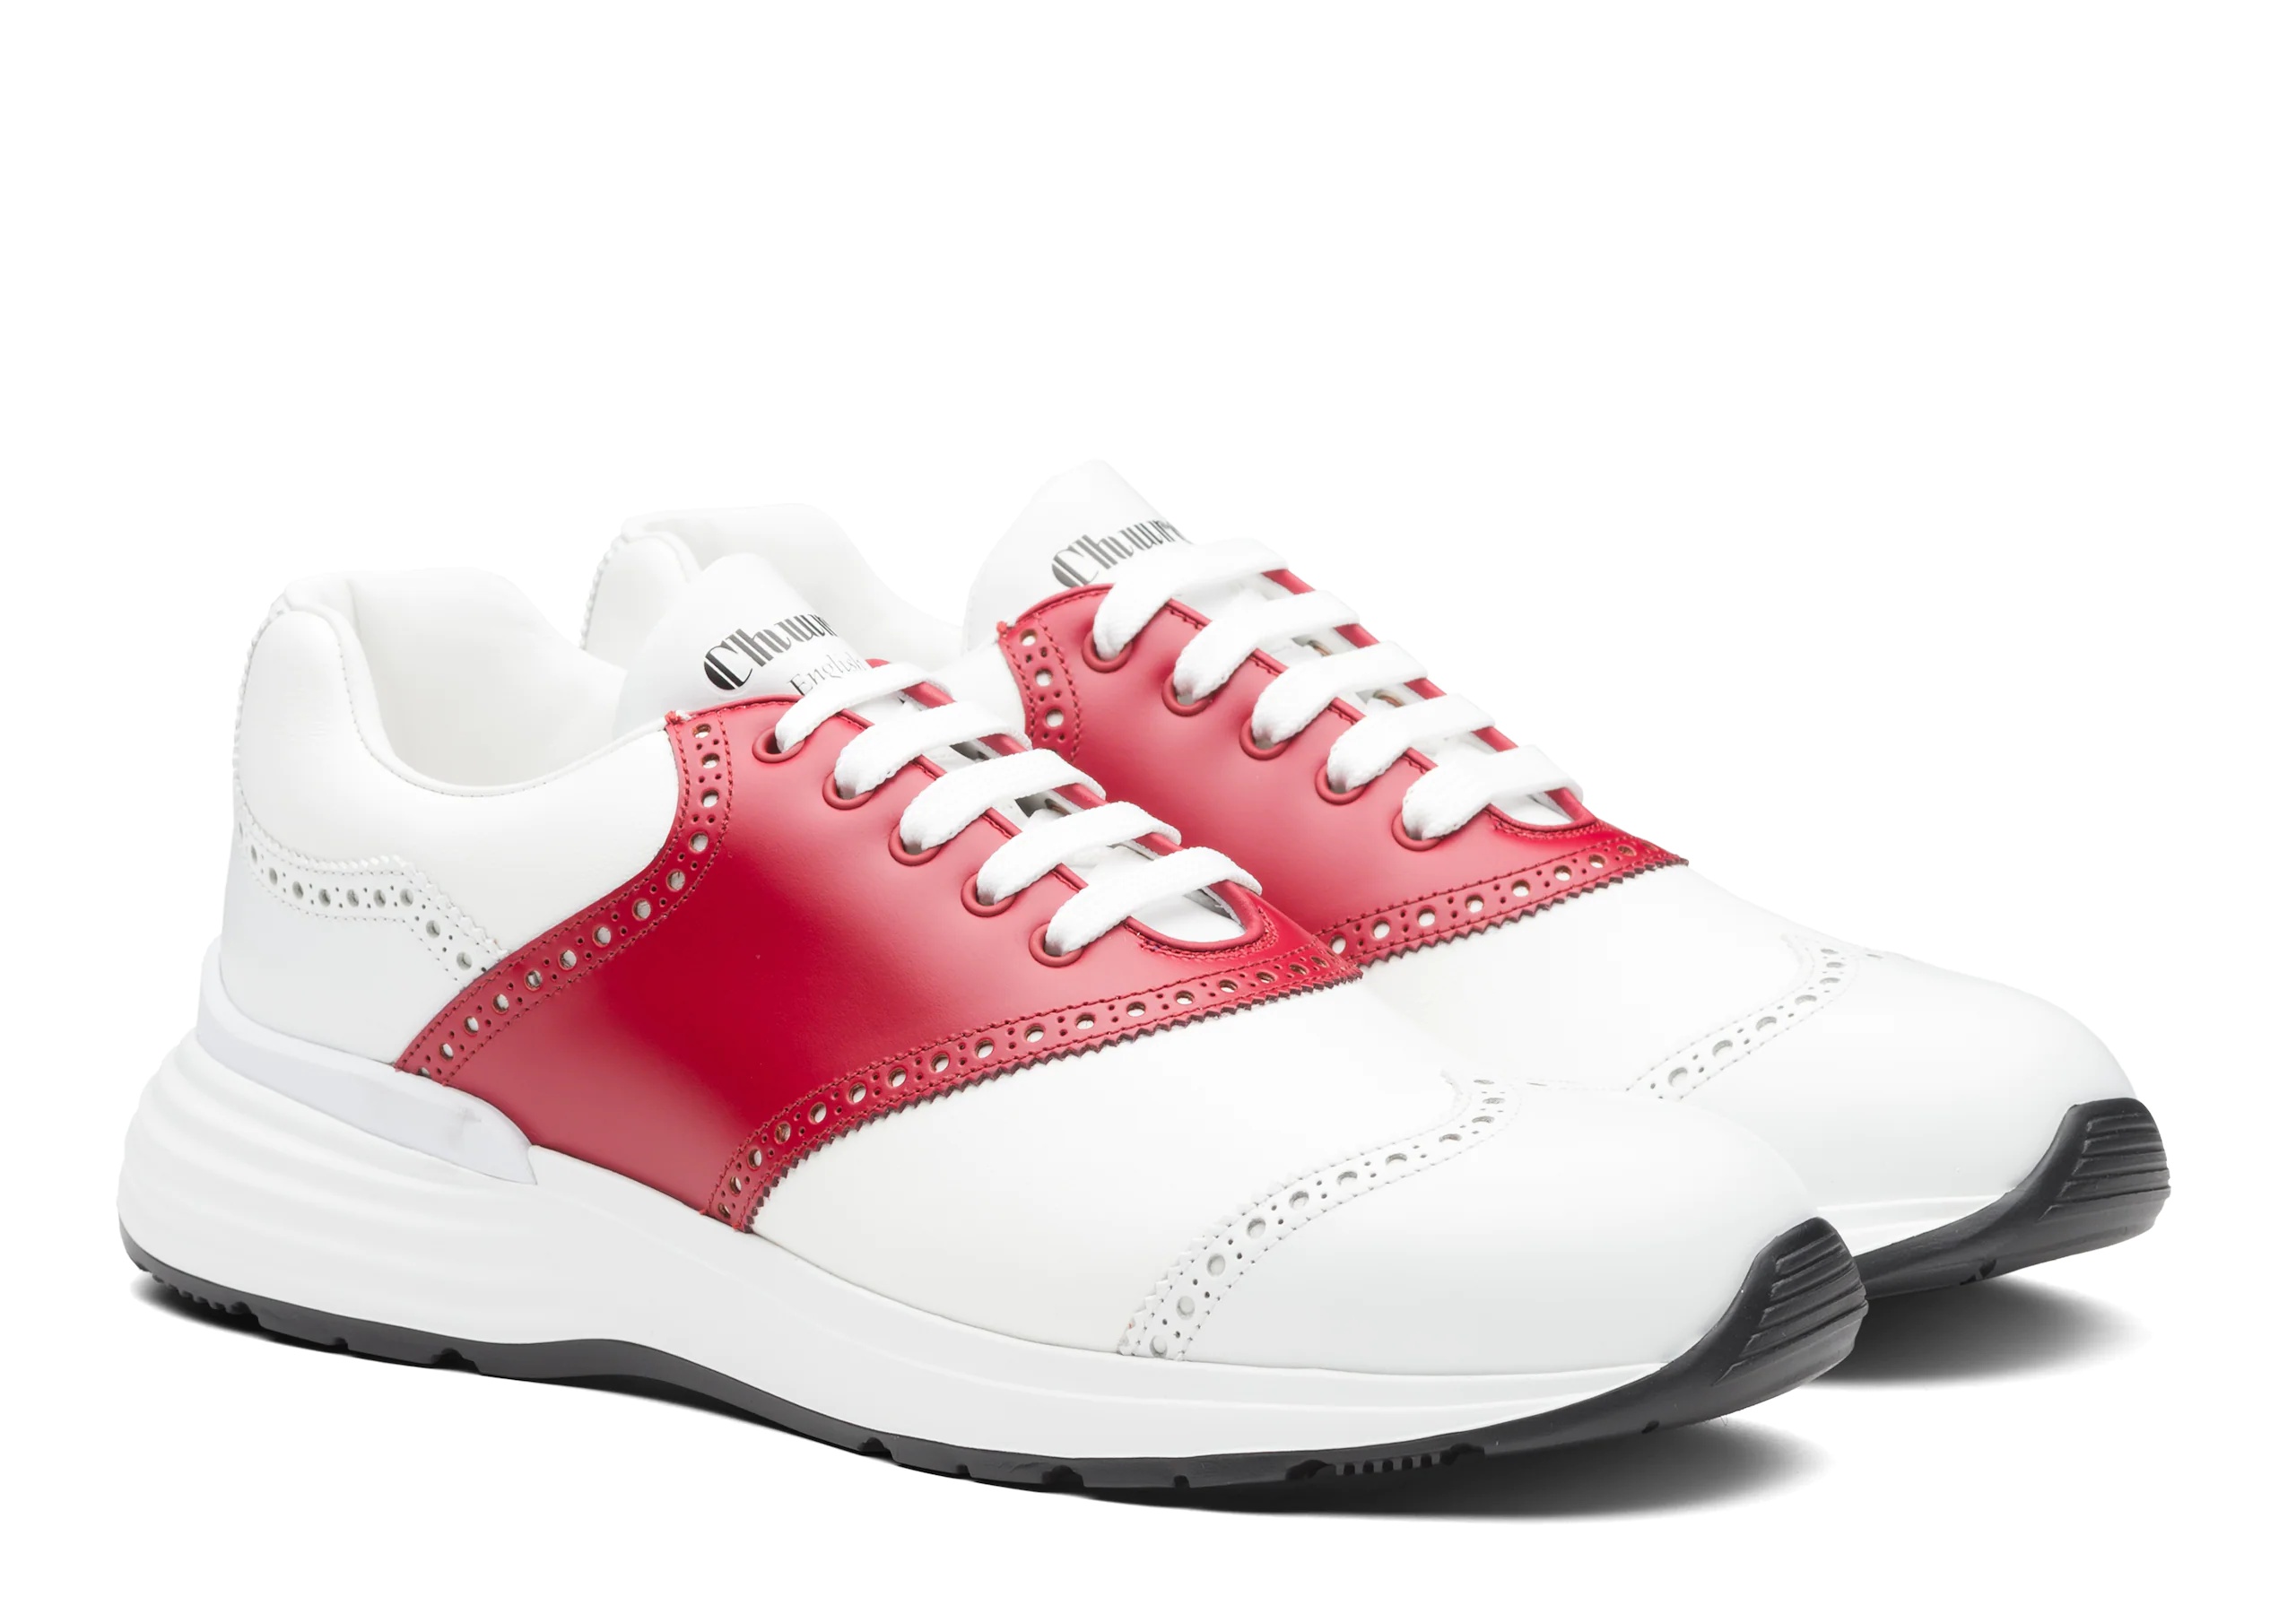 Ch873 golf
Rois Calf Sneaker White/scarlet - 2